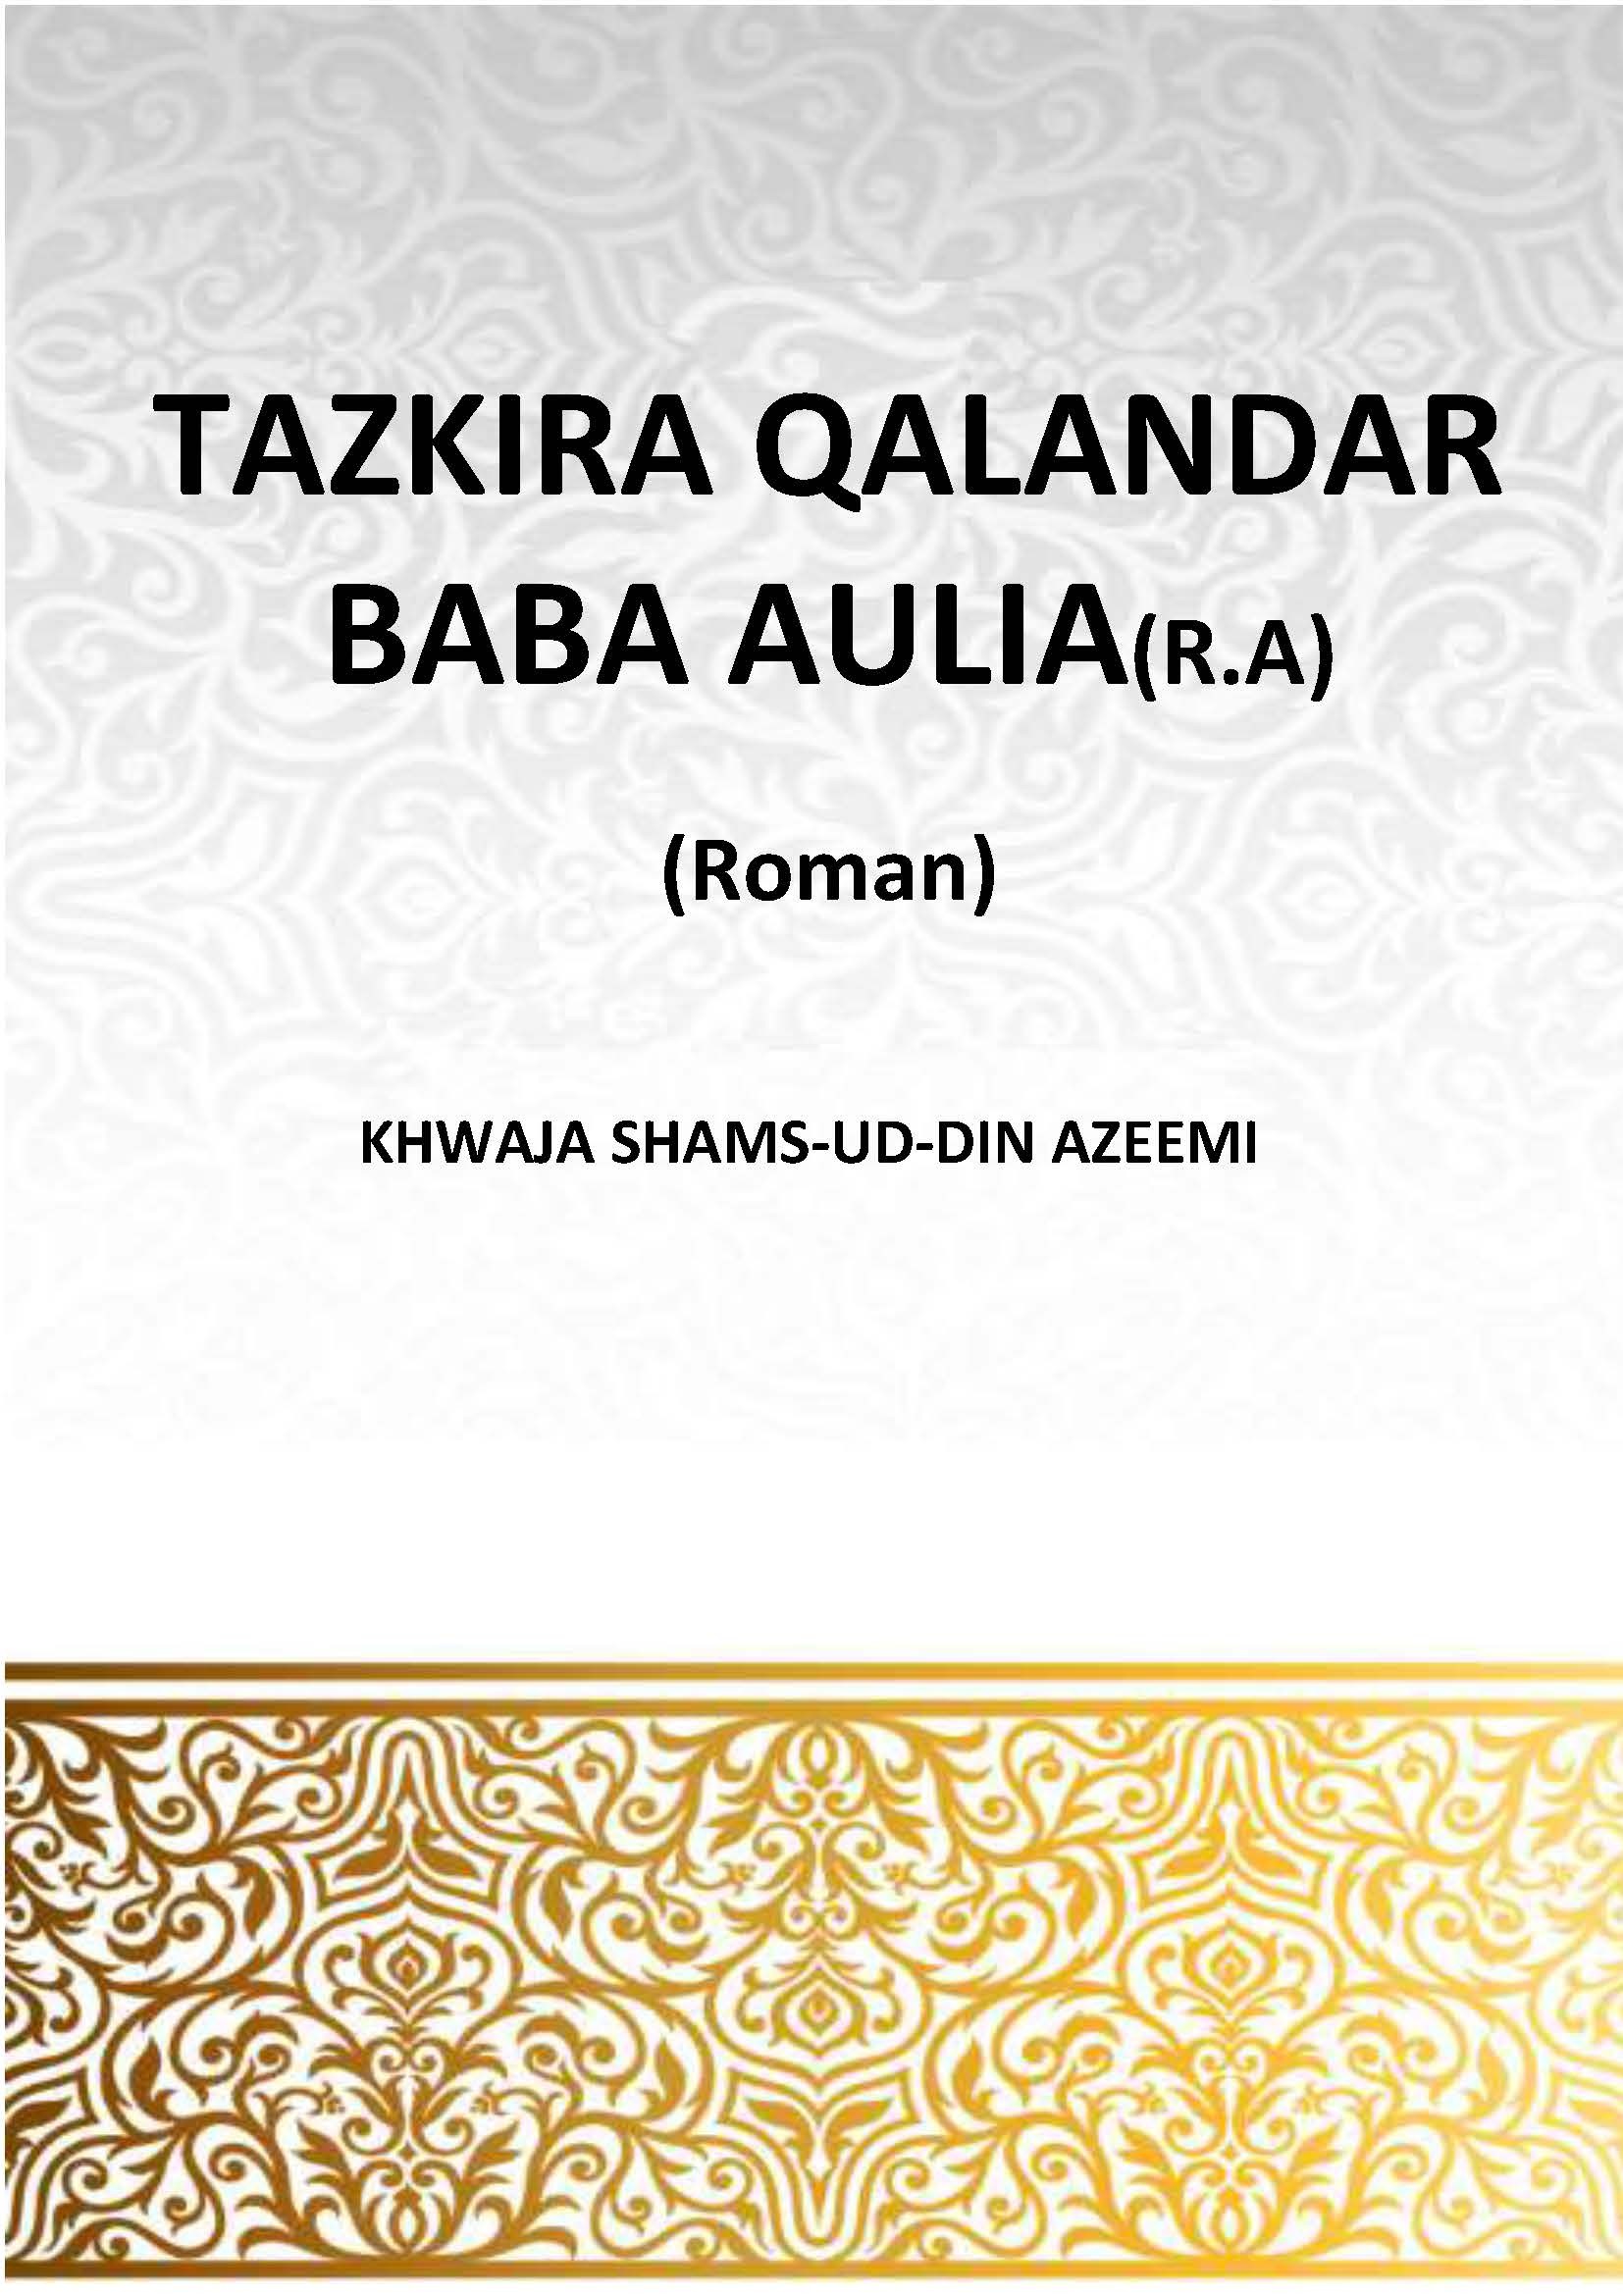 Tazkira Qalandar Baba Aulia R.A